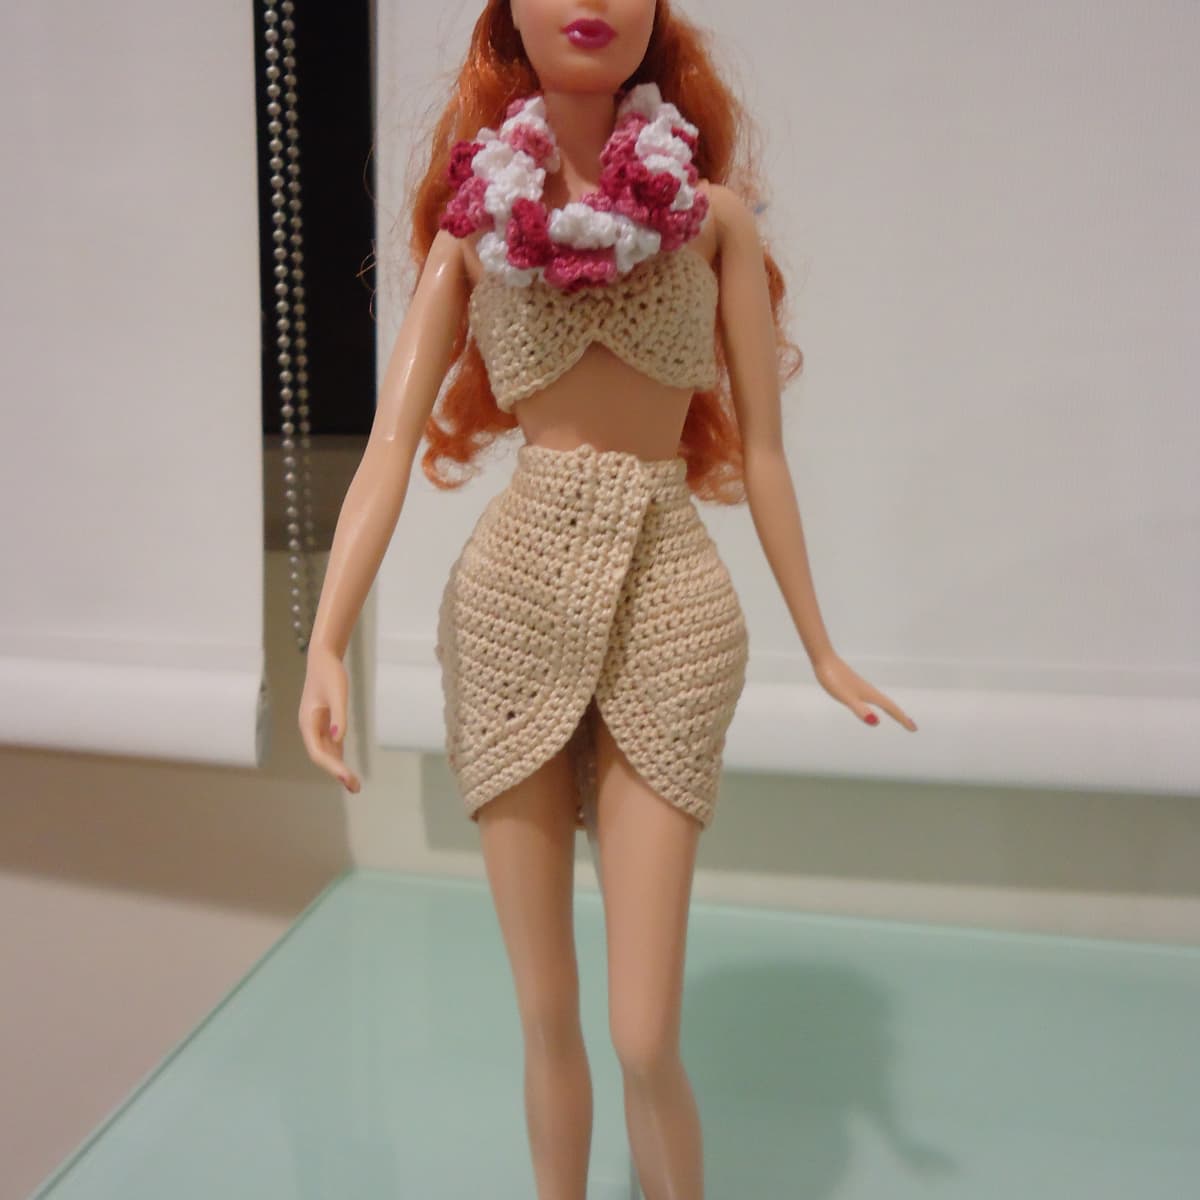 PDF Sewing Pattern Underwear Bikinis, Bra, Pants, Bust for Made to Move  Barbie Original Fashion Dolls -  Canada